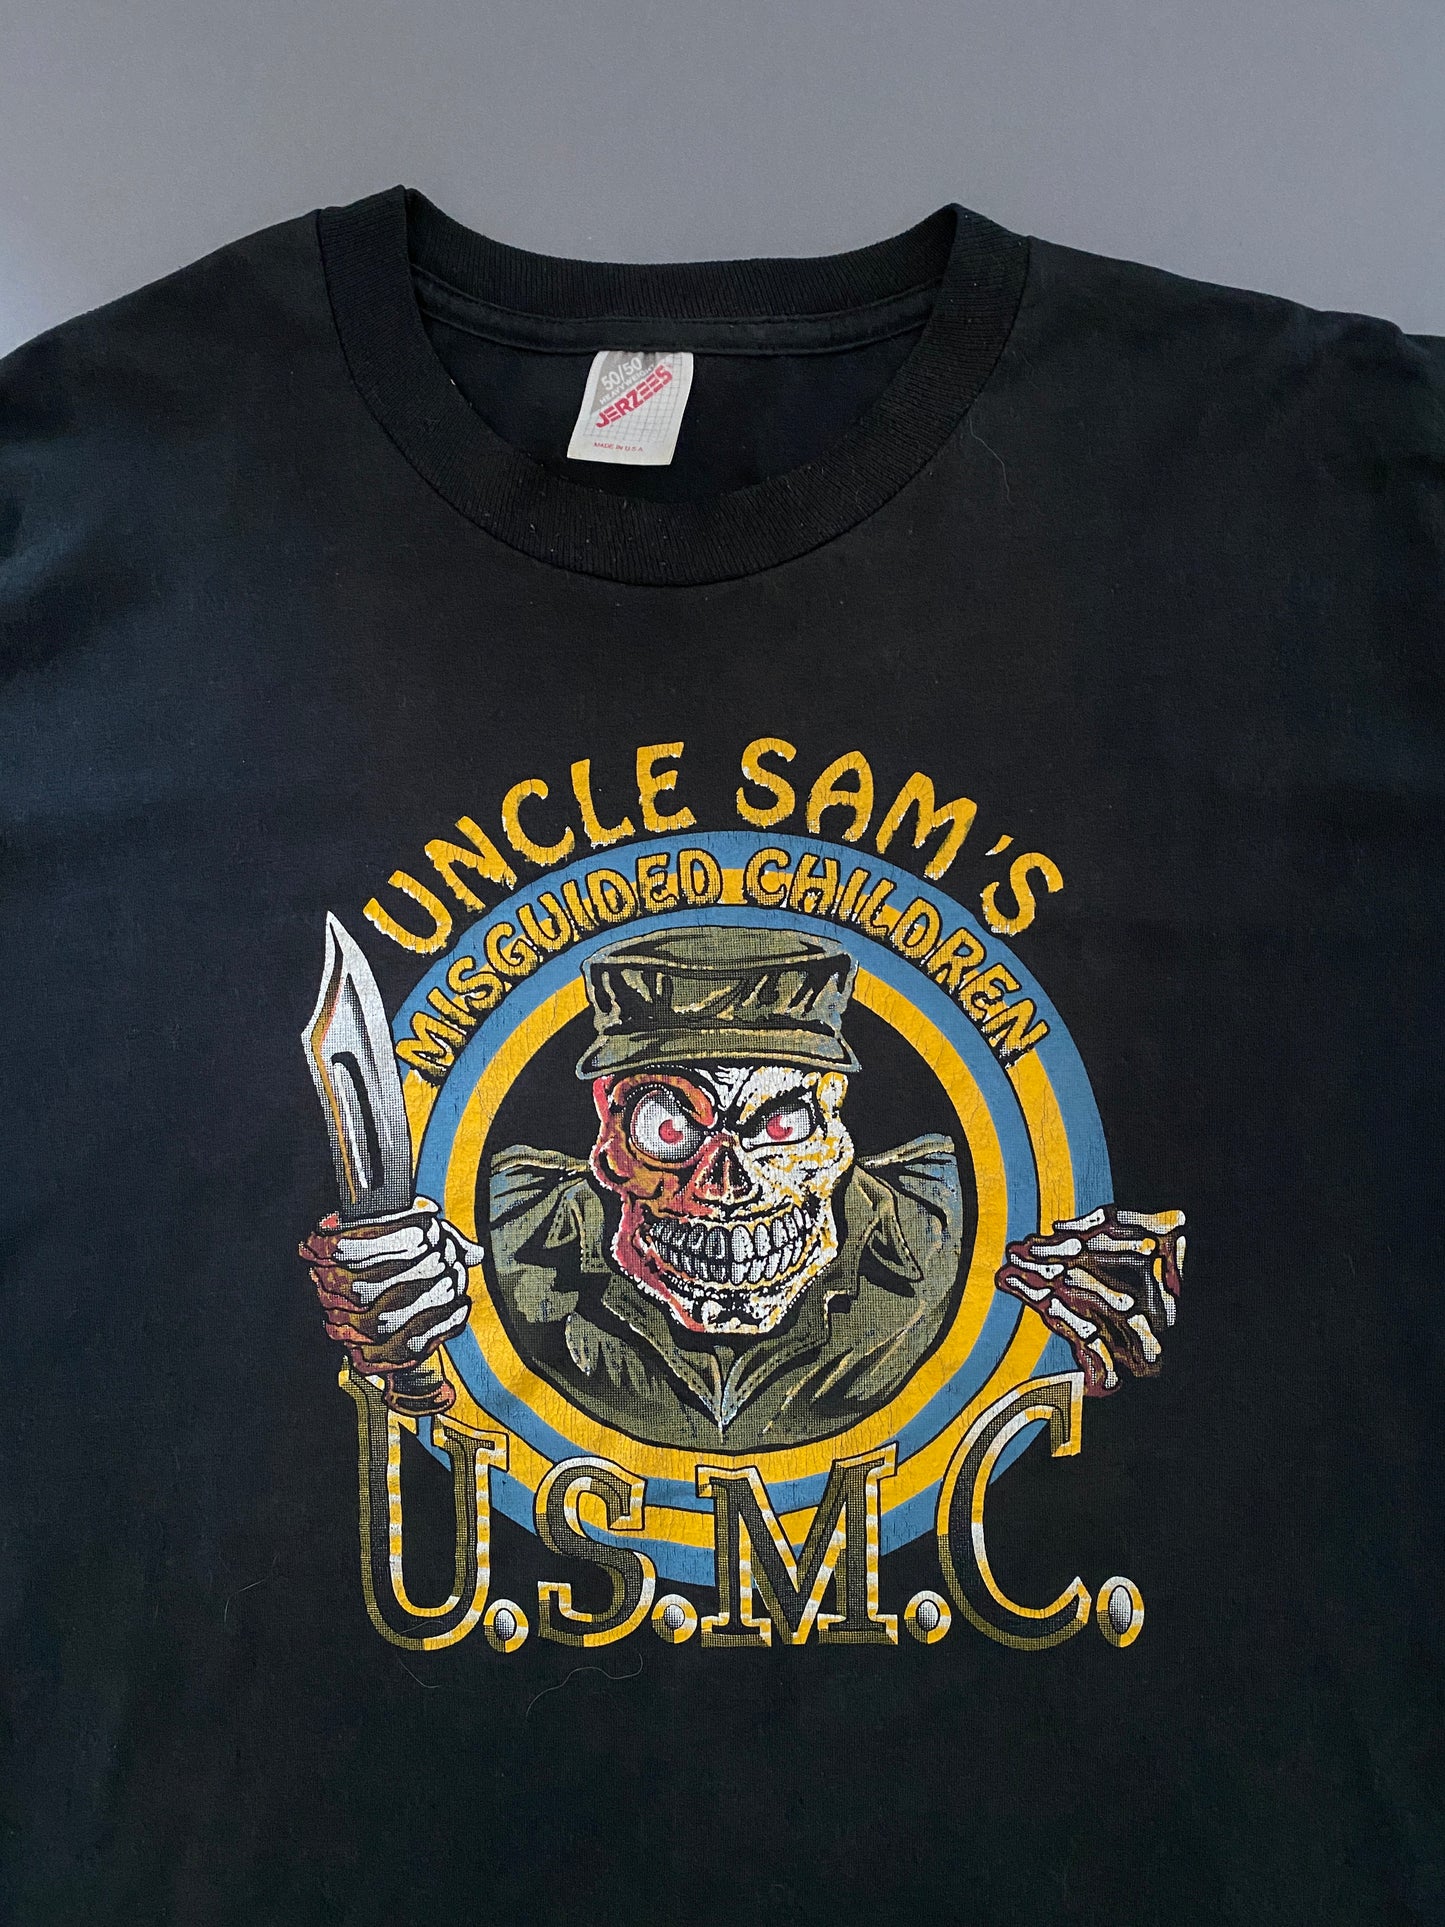 Uncle Sam's Vintage T-shirt